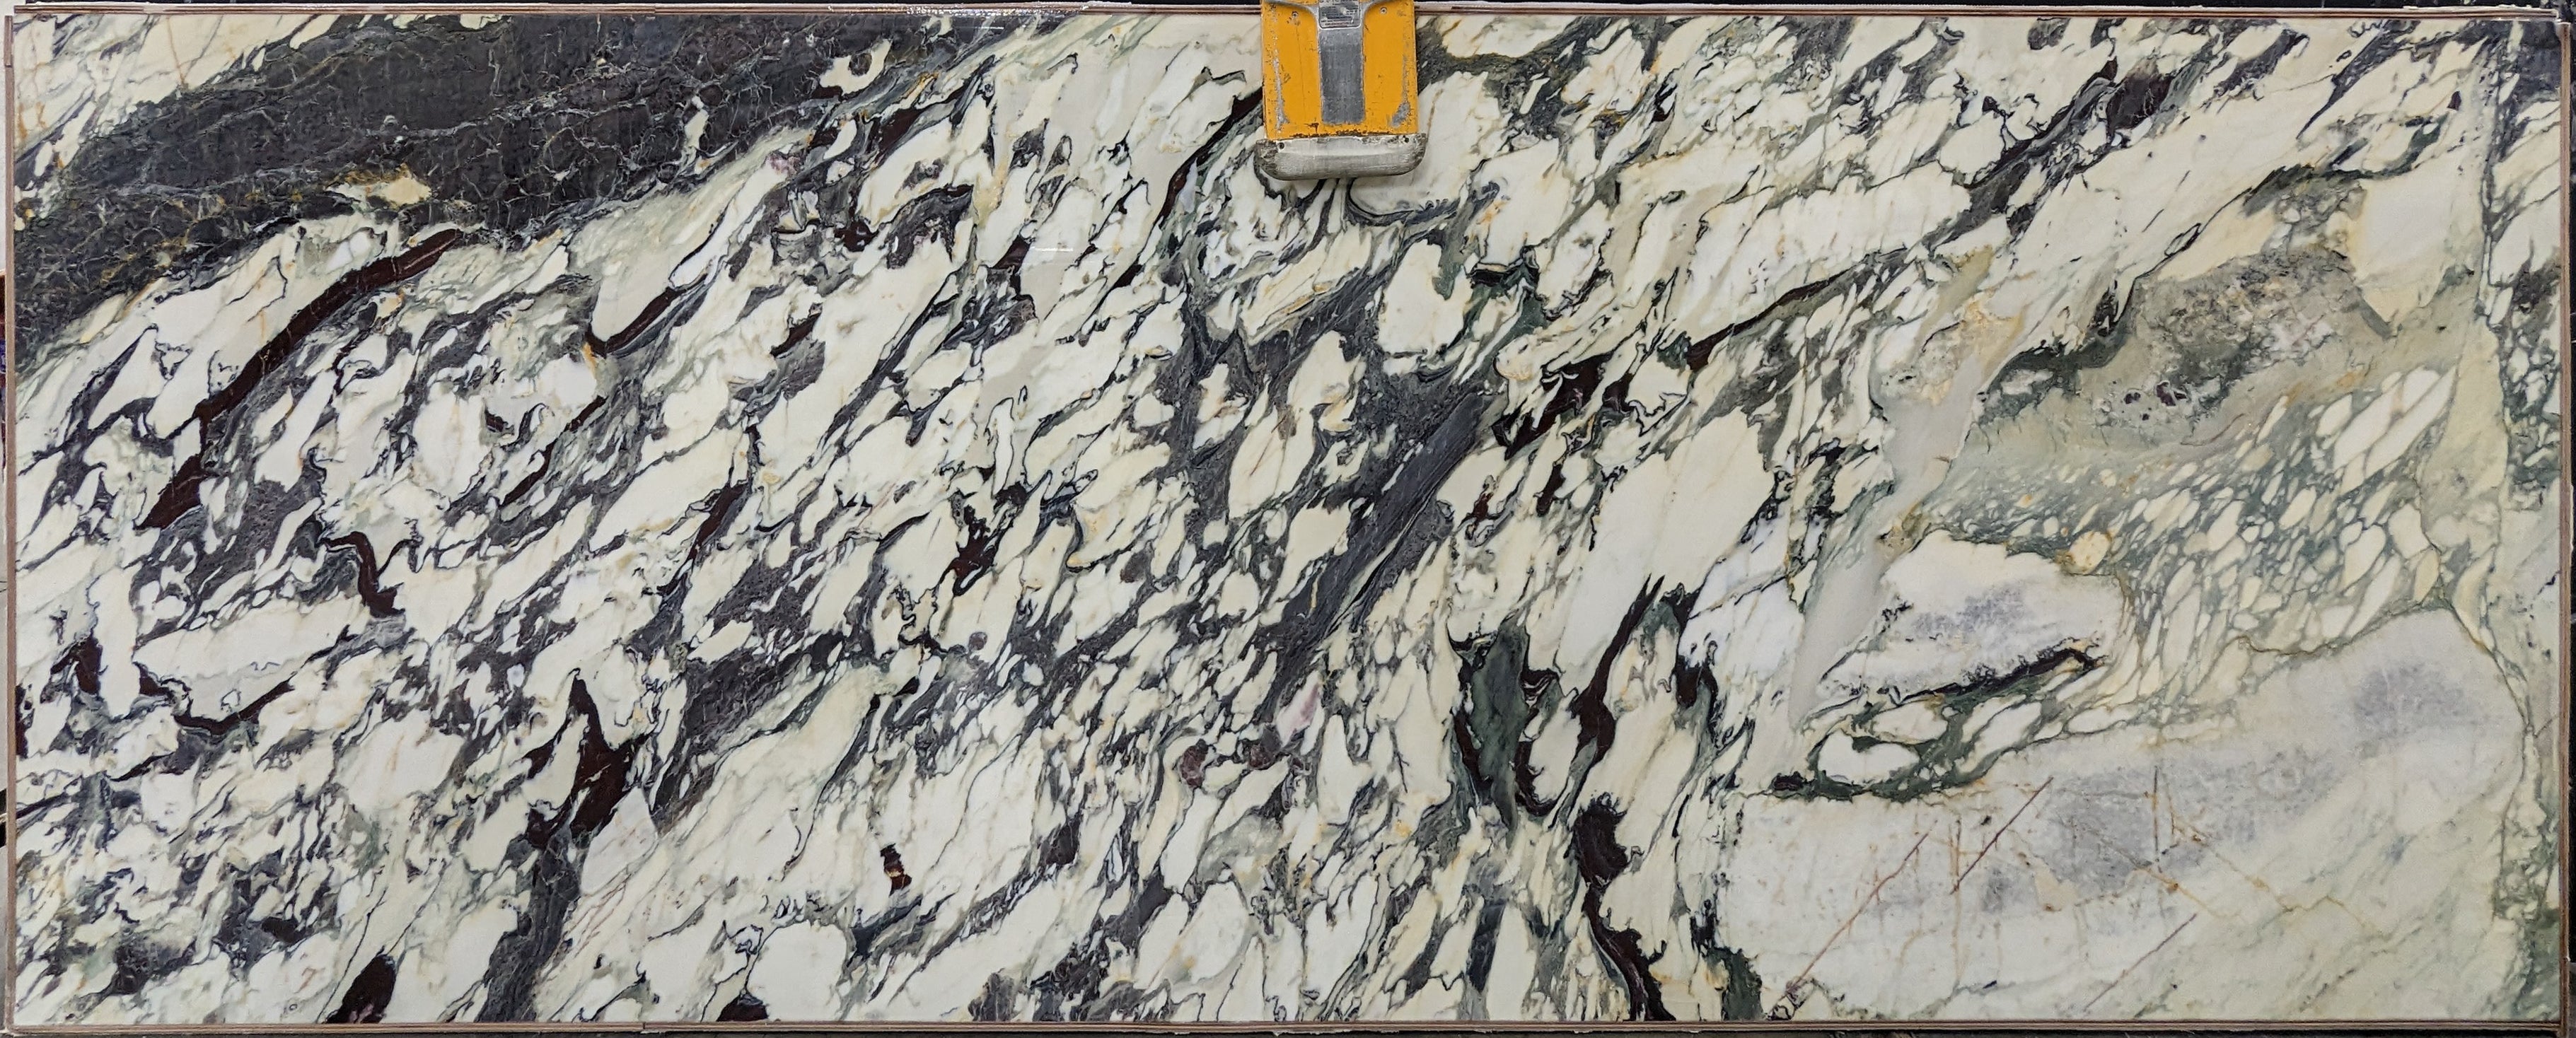  Breccia Capraia Marble Slab 3/4  Polished Stone - 96115#54 -  49x129 